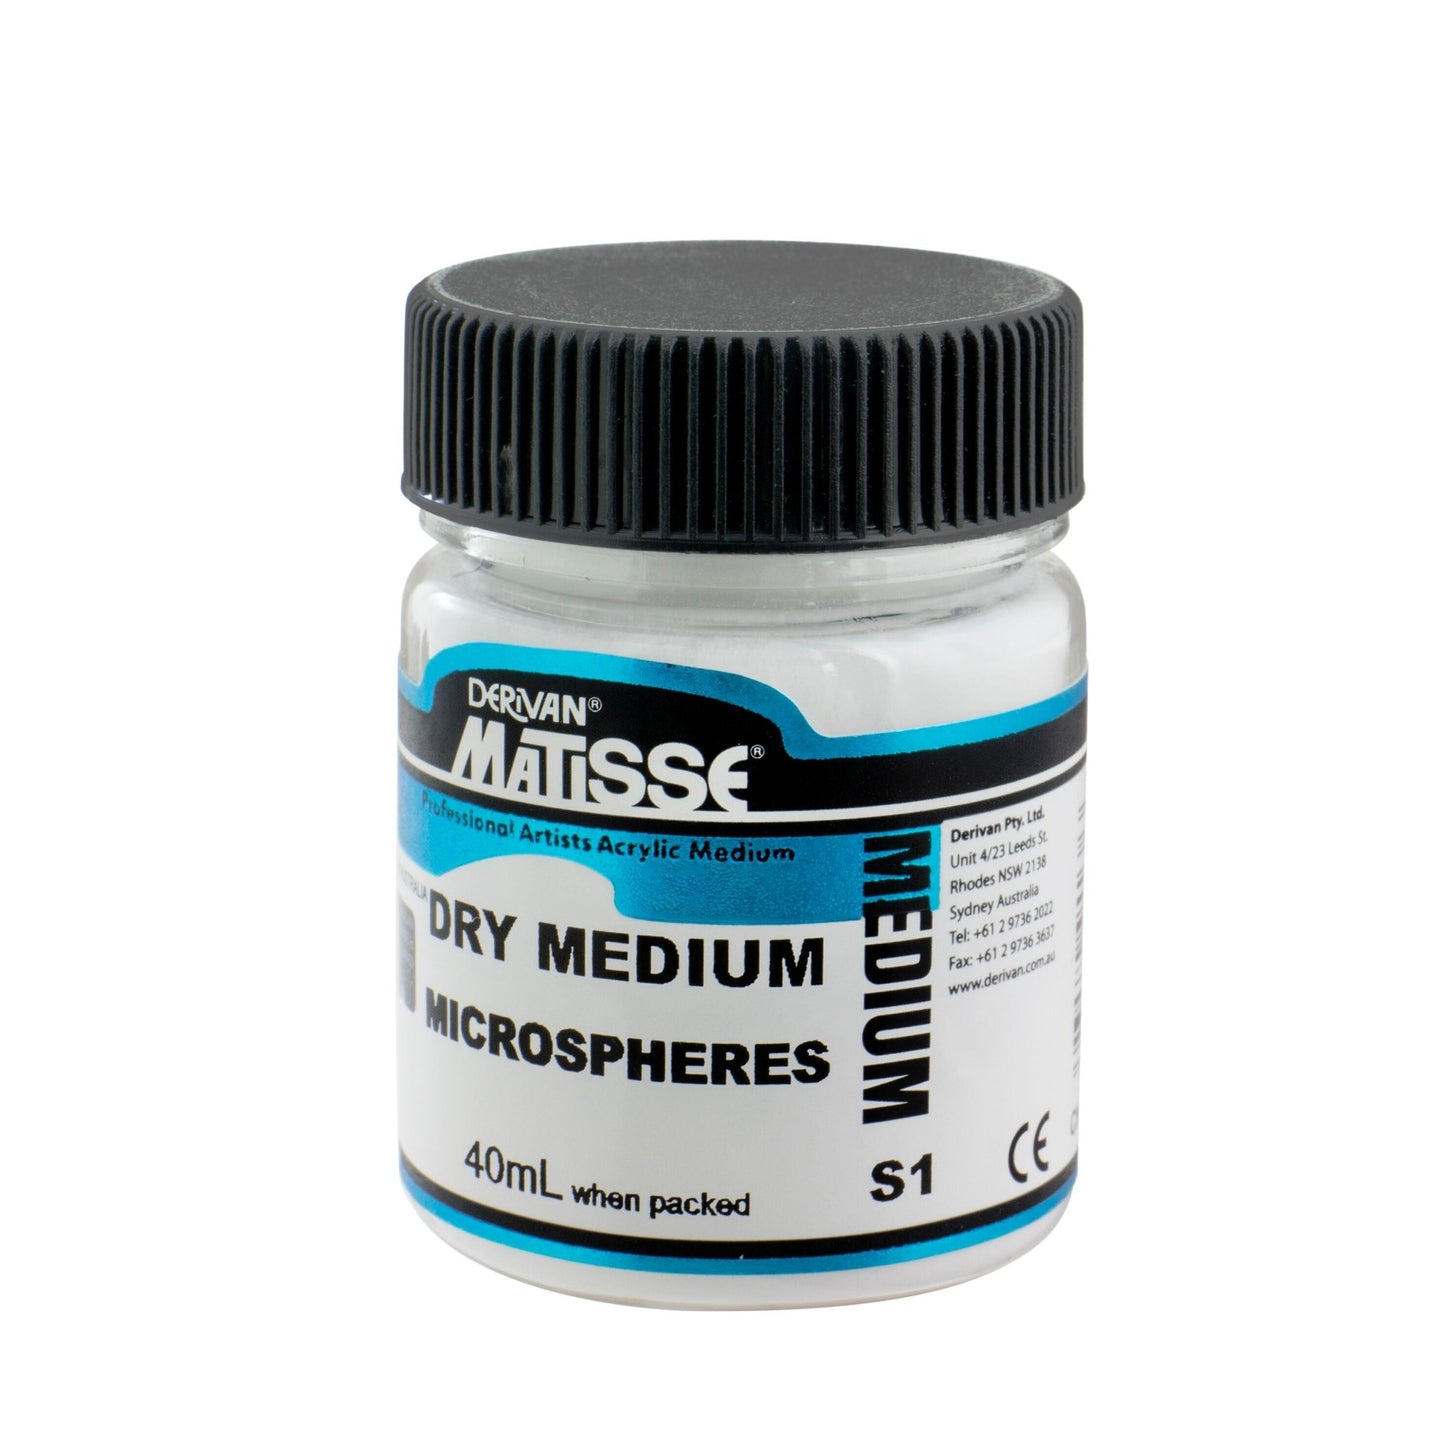 Matisse Dry Medium 40ml Microspheres - theartshop.com.au